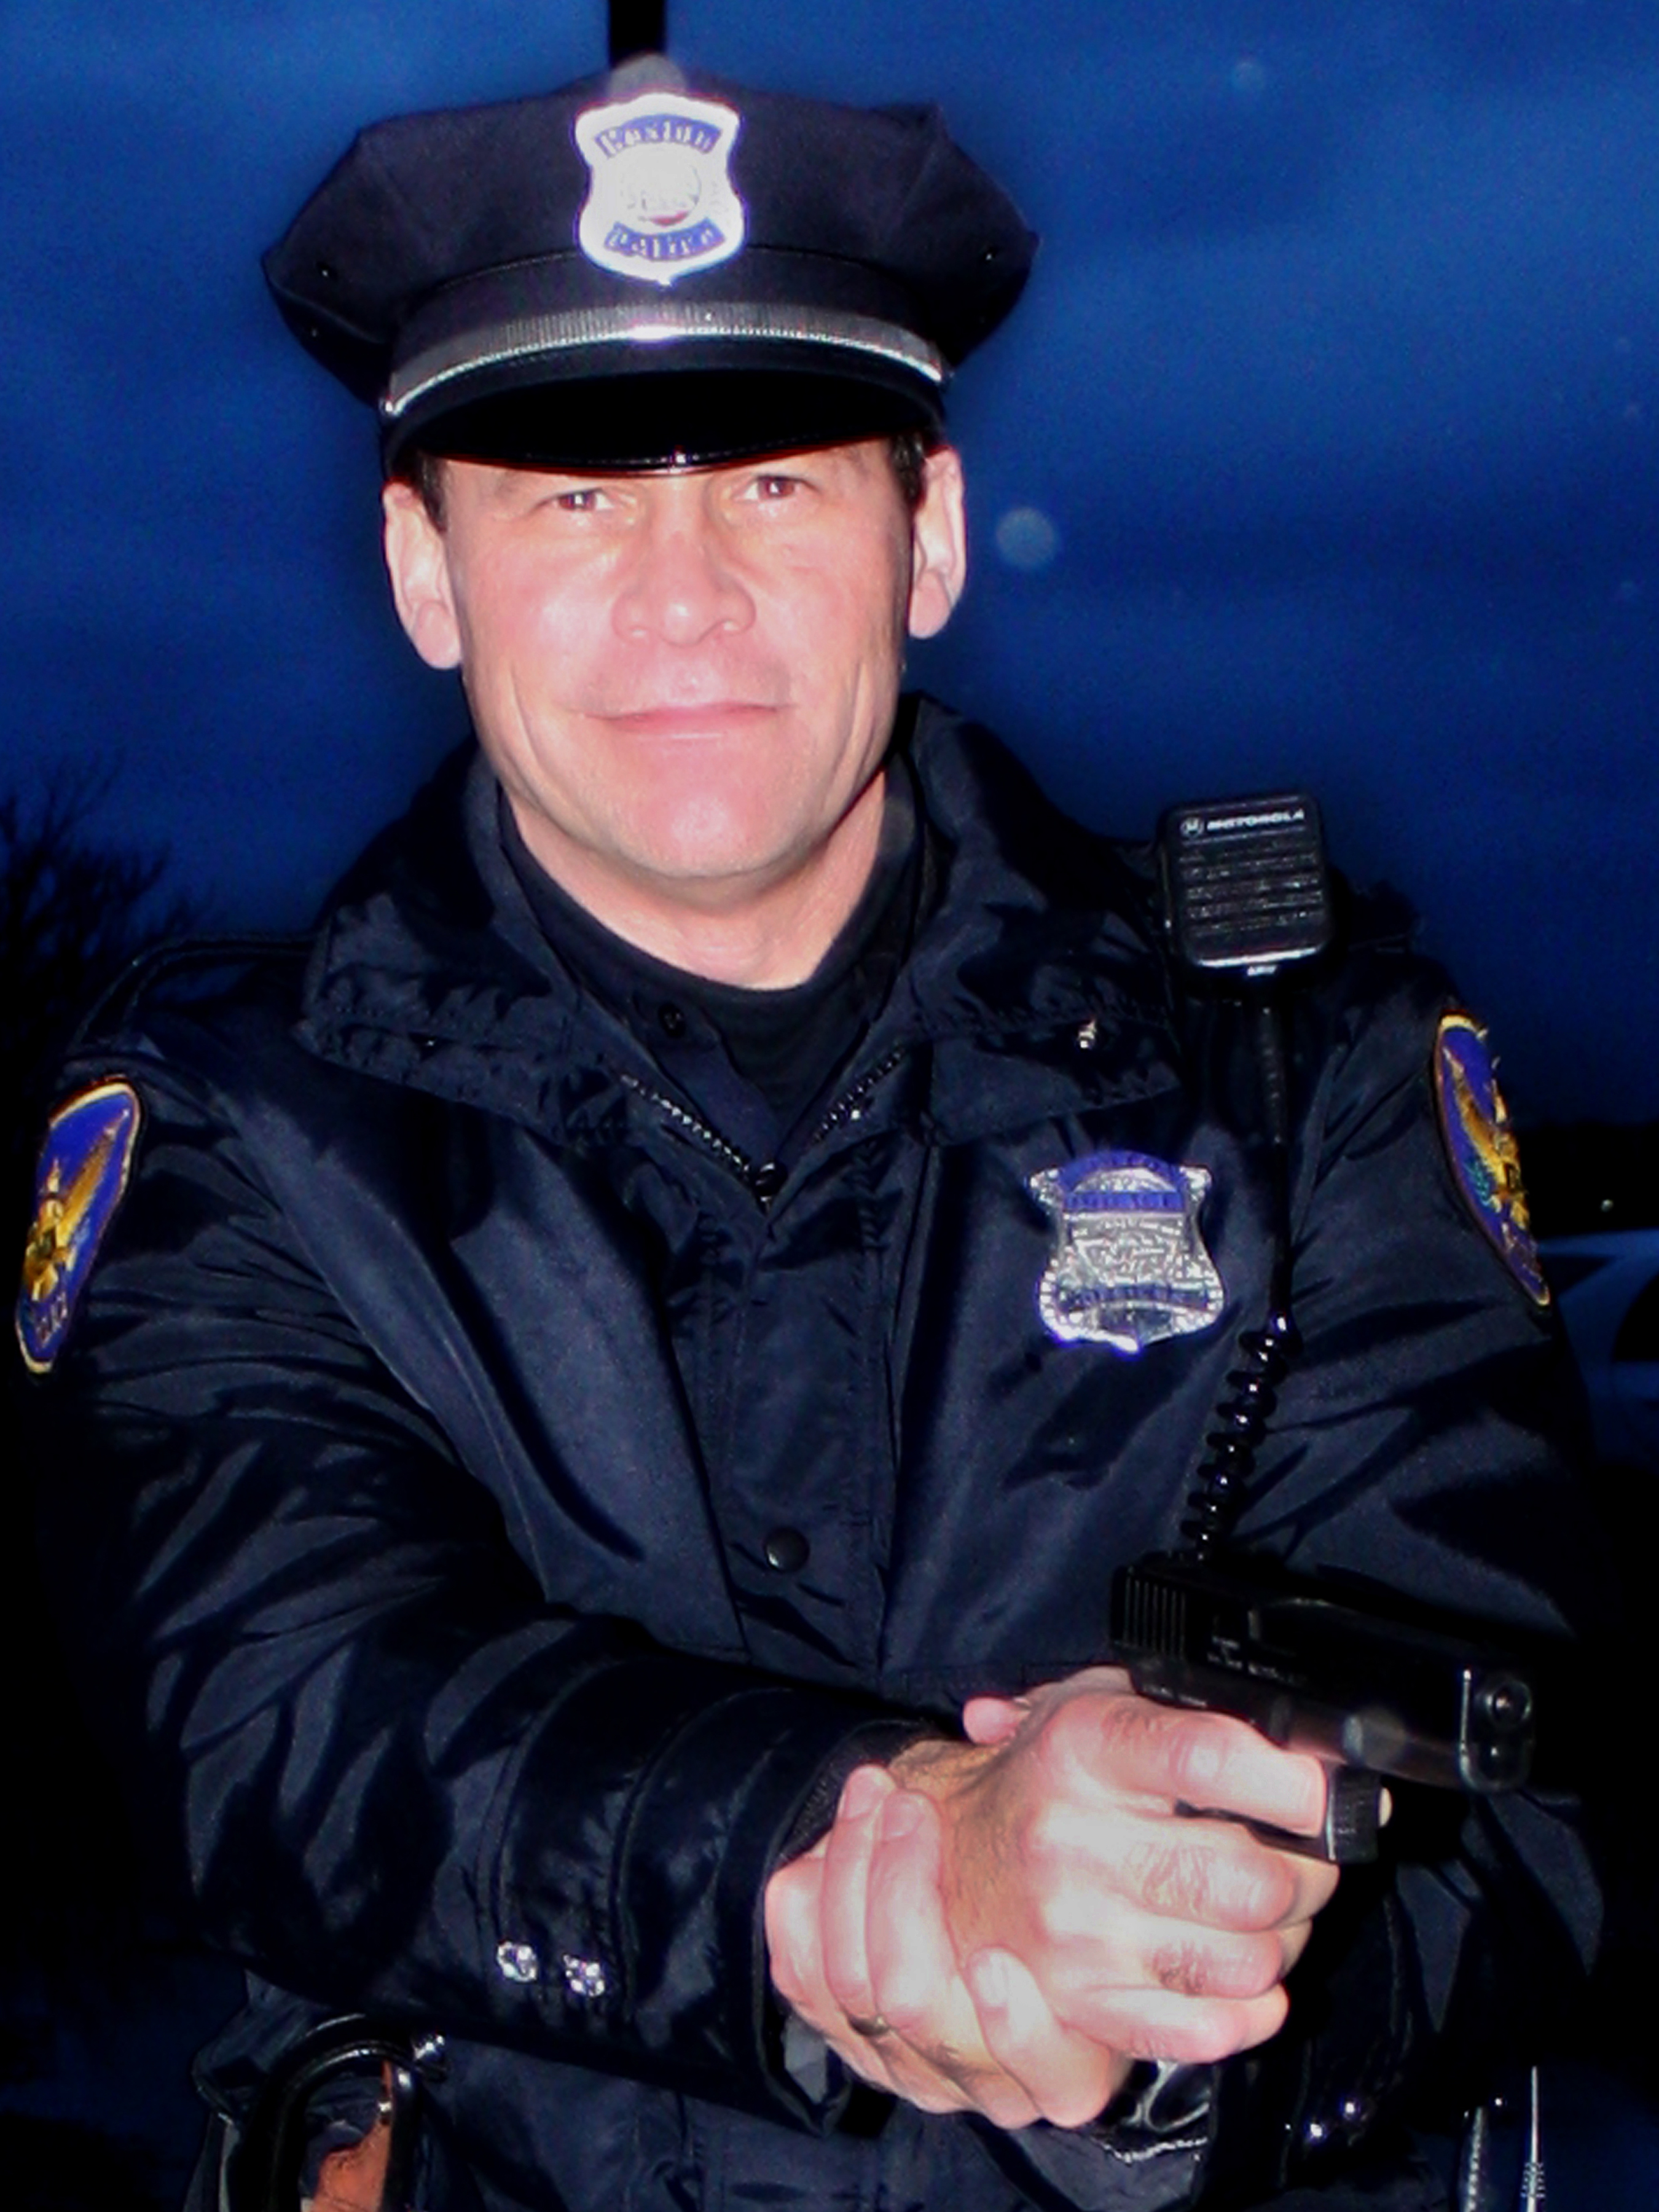 Bunker Hill Jeff Corazzini as Boston Police Officer